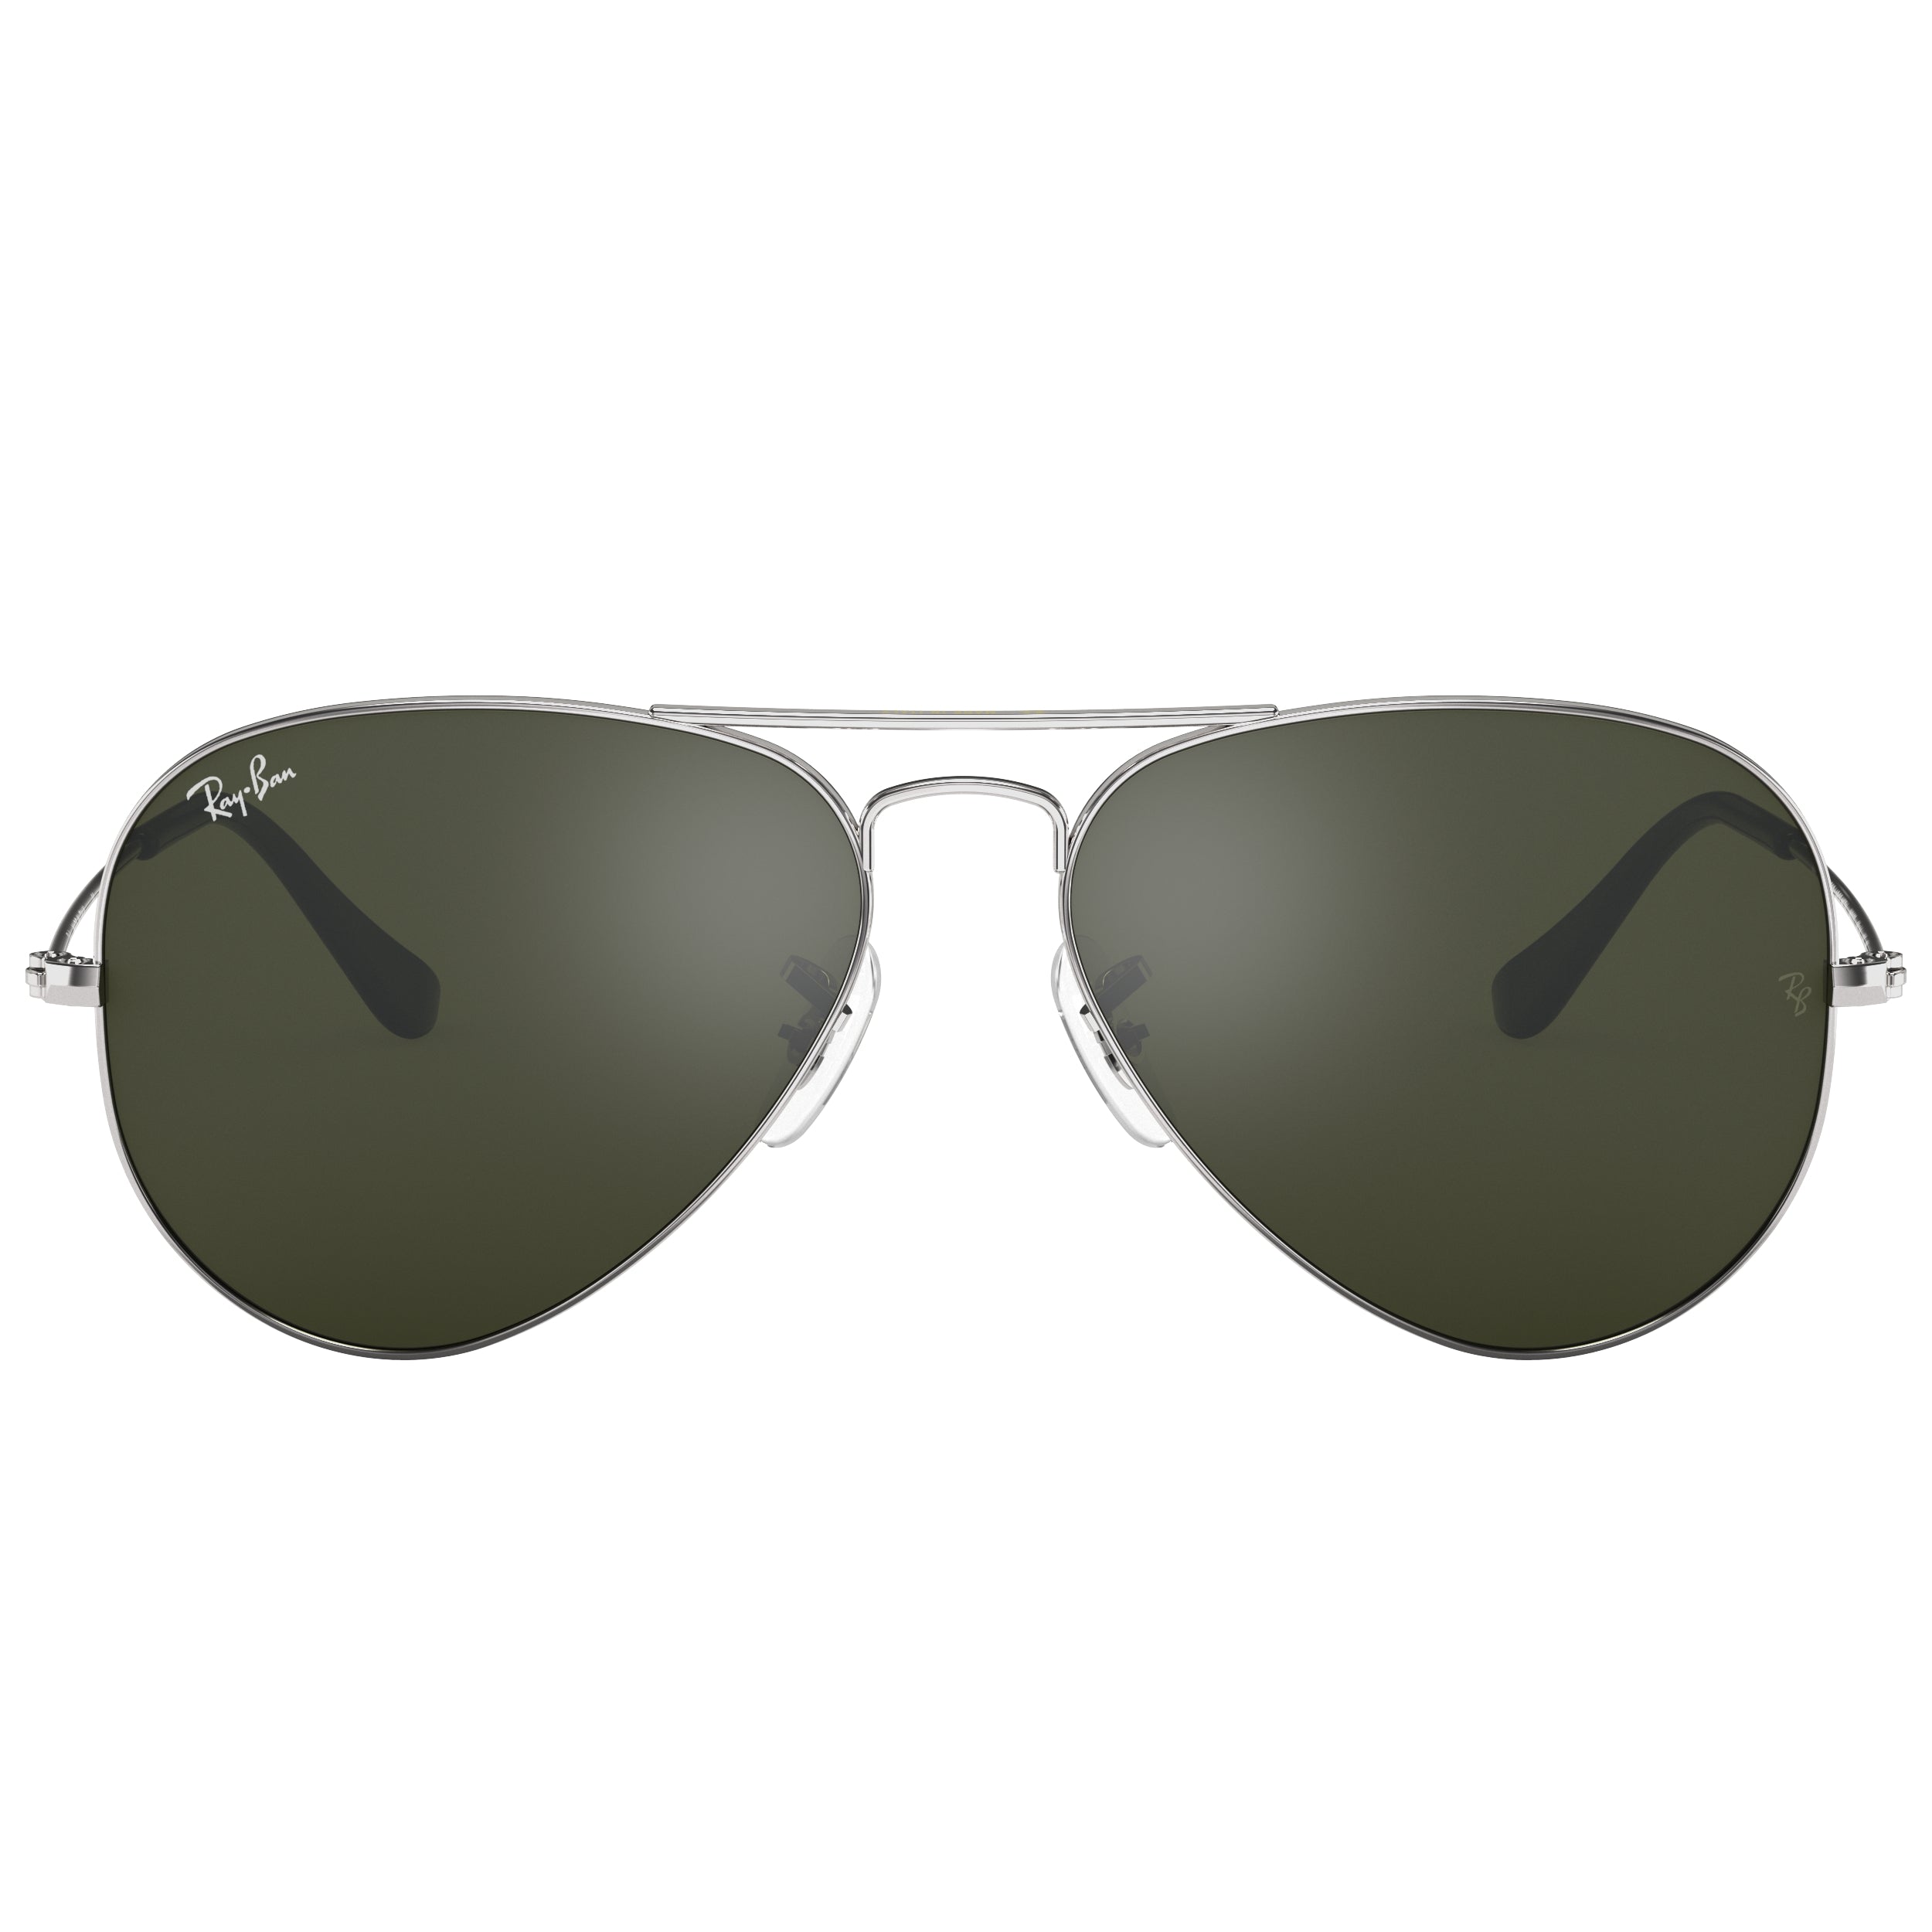 Ray-Ban Aviator Silver Mirror Mirrored Aviator/Pilot Men's Sunglasses RB3025 W3277 58